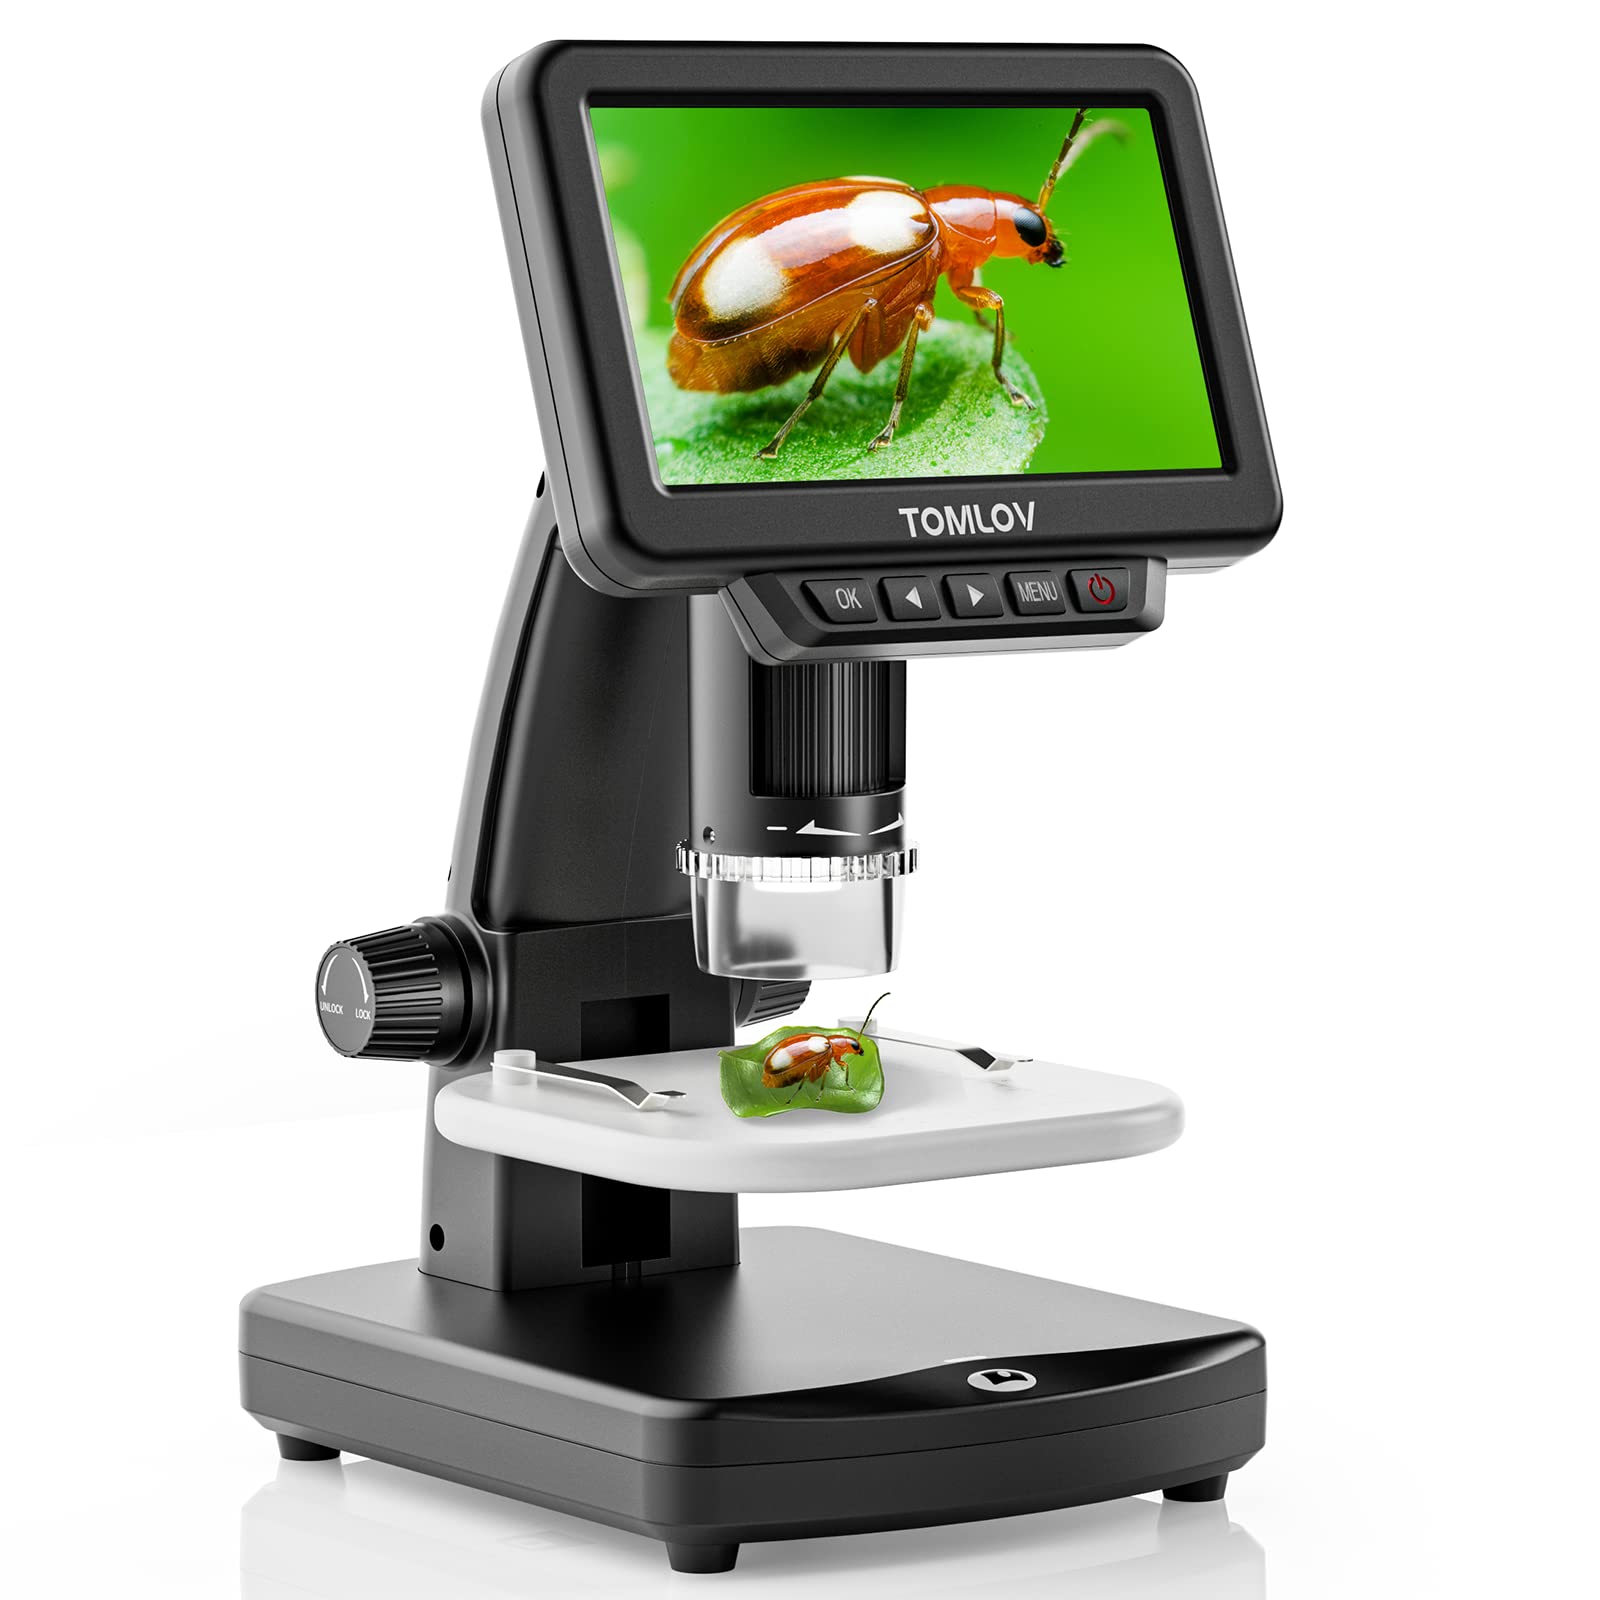 TOMLOV DM13 1000X LCD Digital Microscope, Coin Microscope with 5 IPS